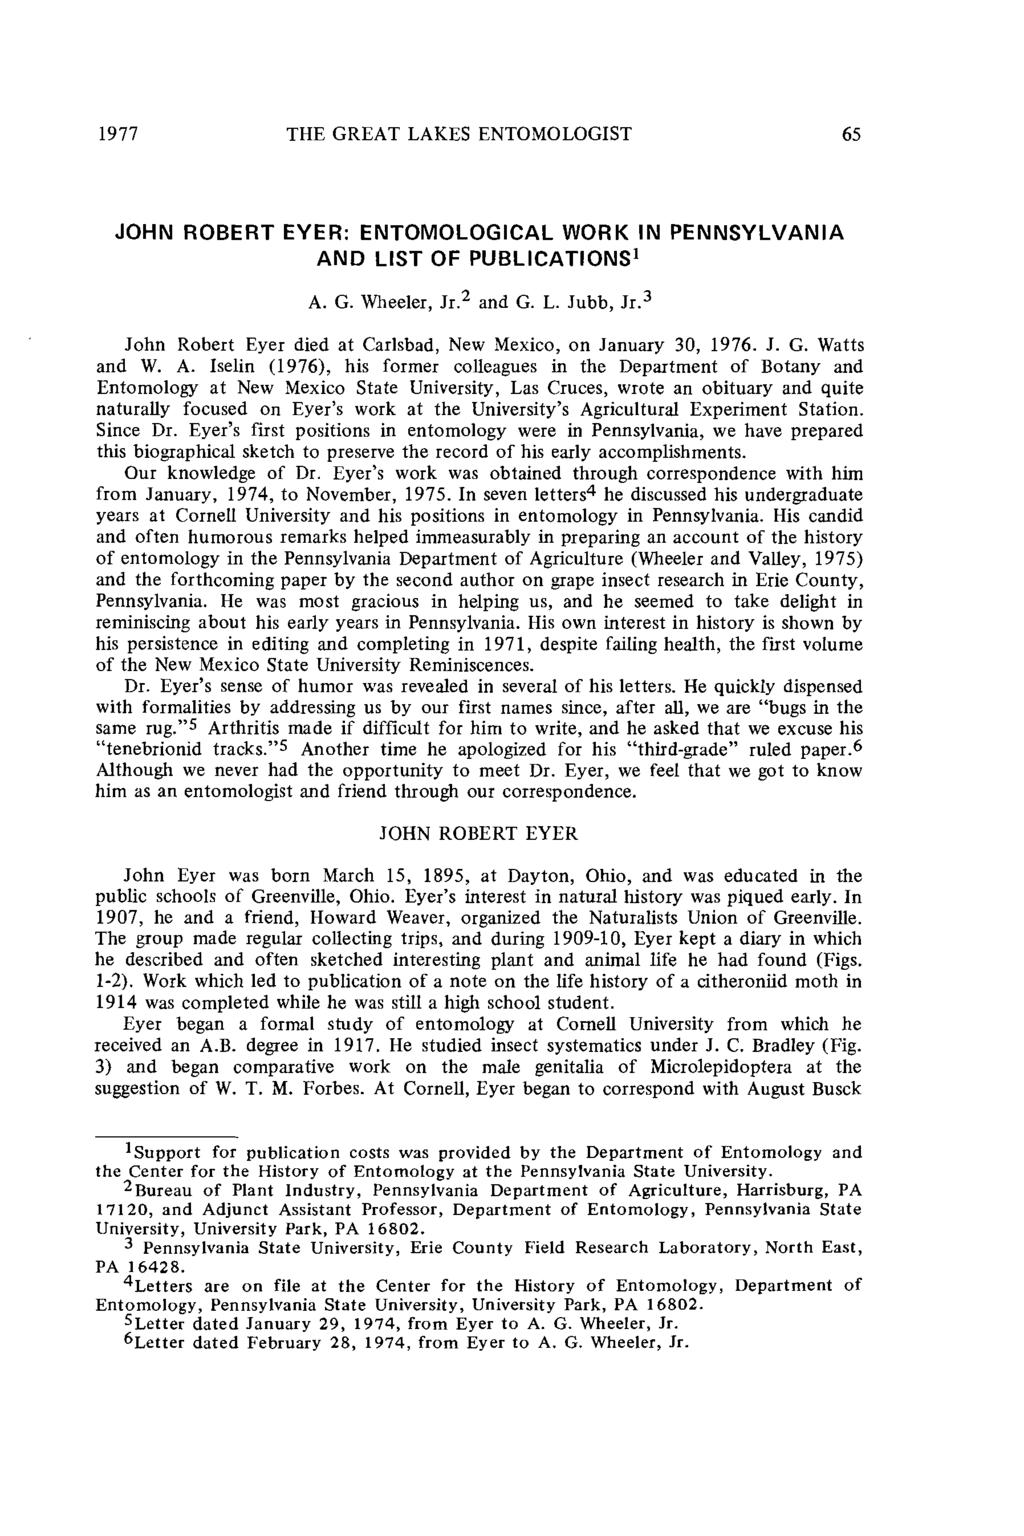 Wheeler and Jubb: John Robert Eyer: Entomological Work in Pennsylvania and Lists of THE GREAT LAKES ENTOMOLOGIST JOHN ROBERT EYER: ENTOMOLOGICAL WORK IN PENNSYLVANIA AND LIST OF PUBLICATIONS' A. G. Wheeler, JI.